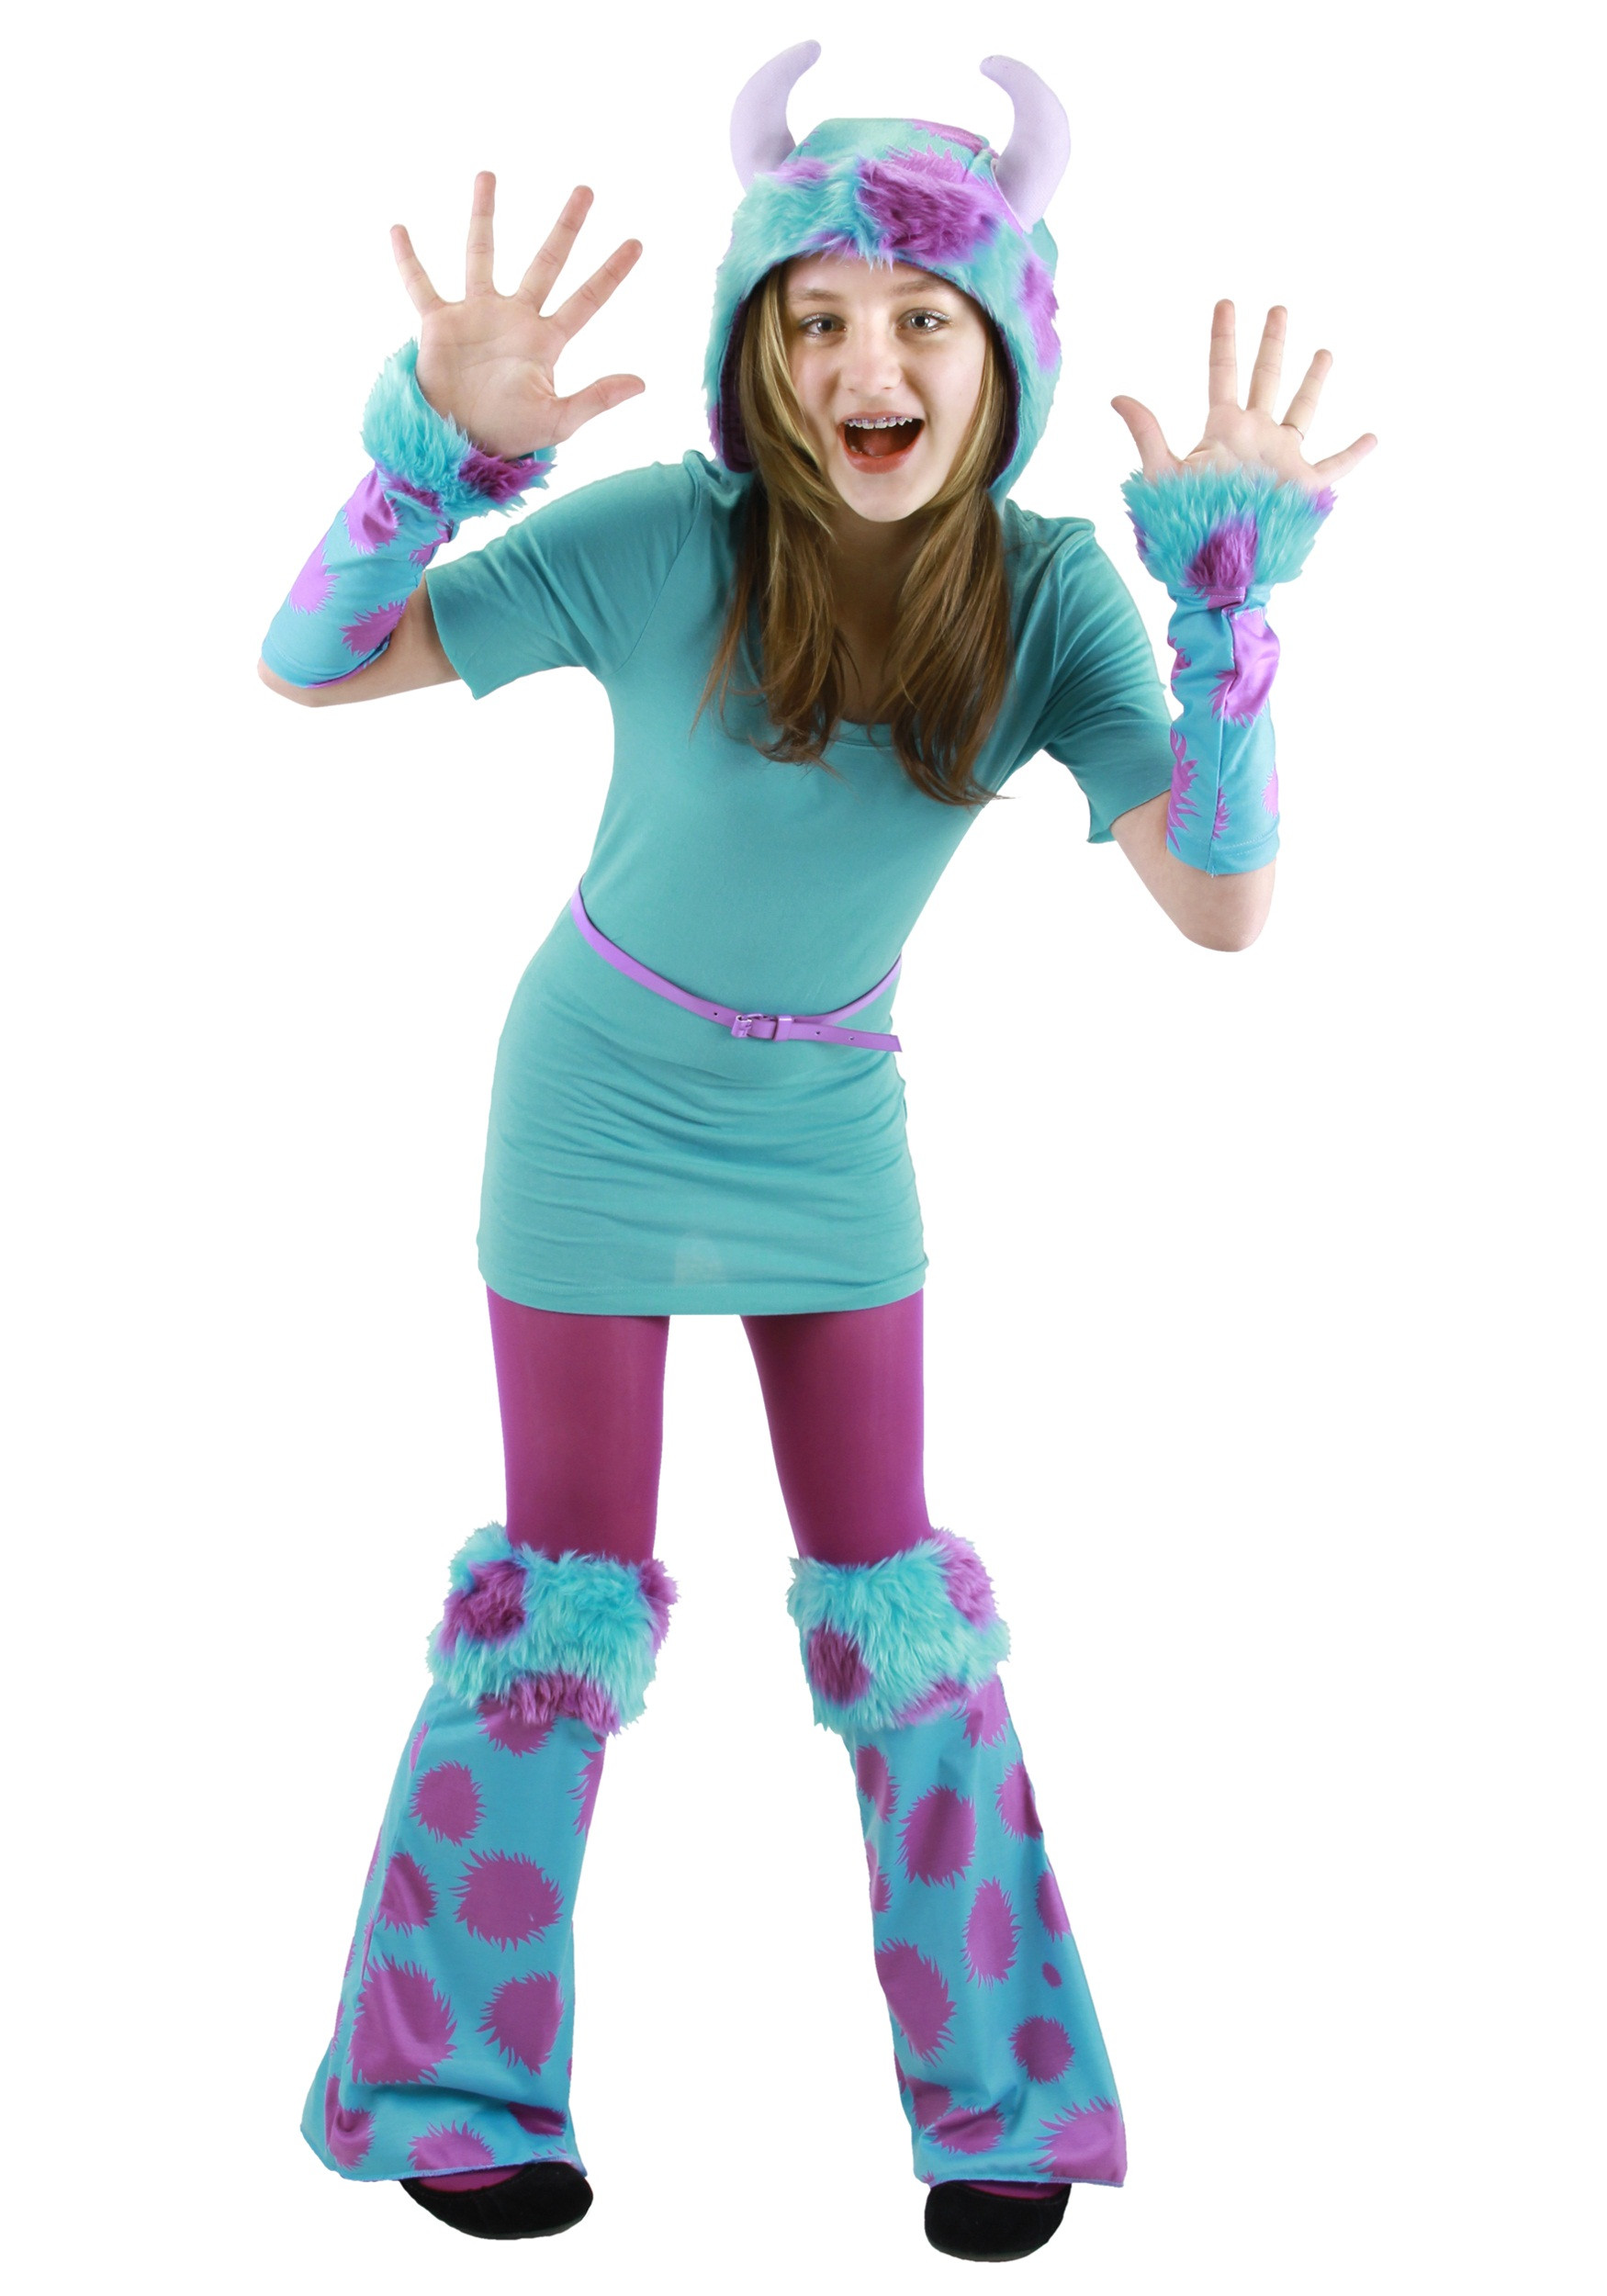 DIY Monsters Inc Costume
 Sully Costumes for Men Women Kids